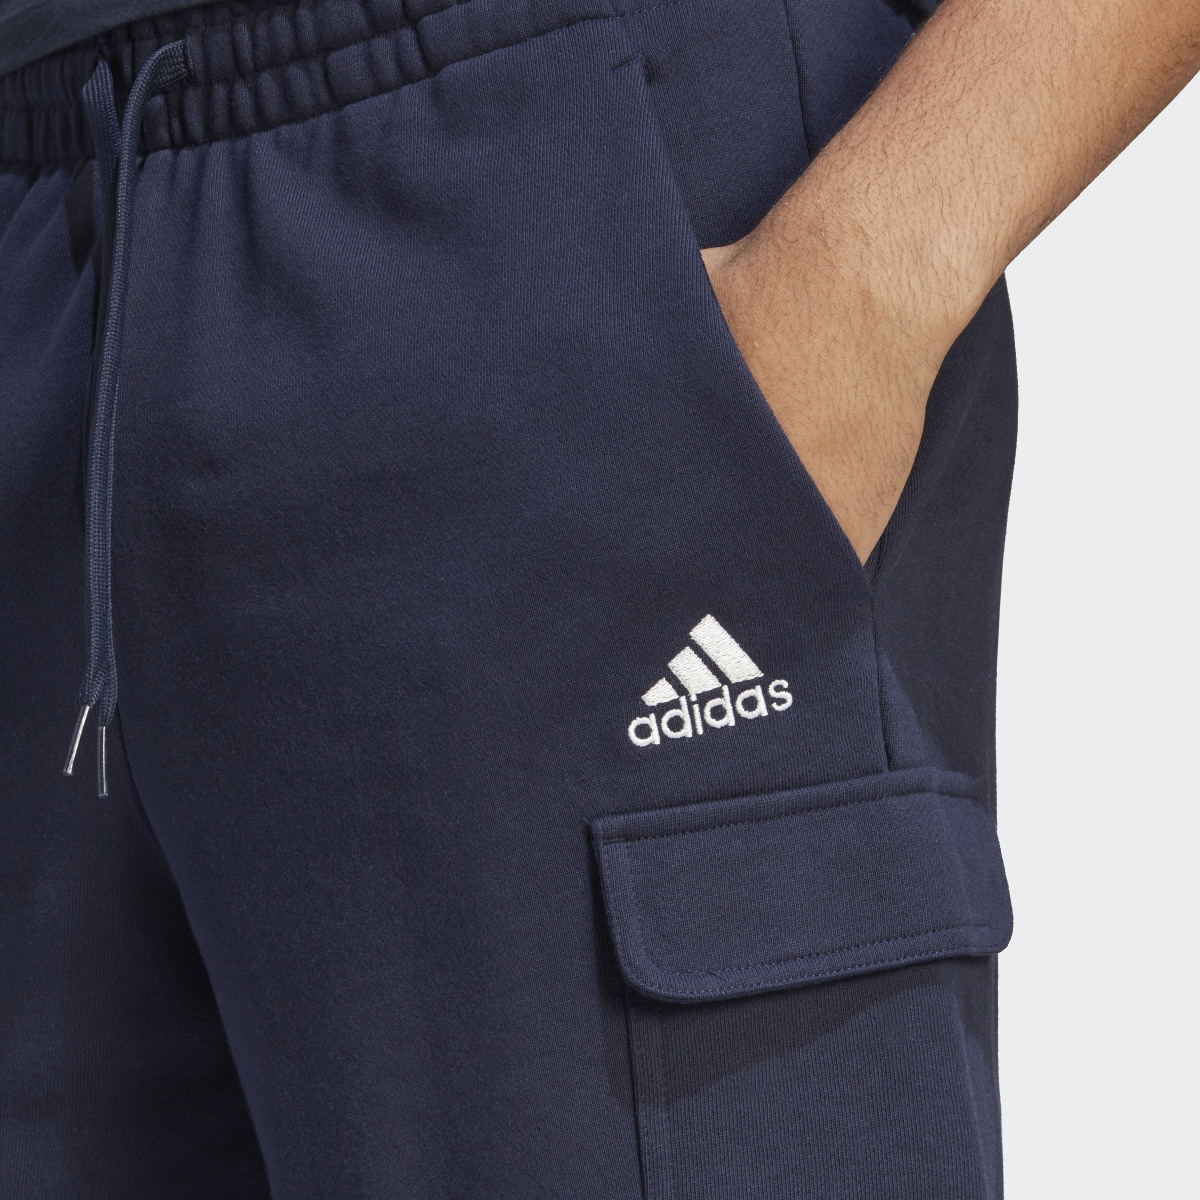 Adidas Short Essentials French Terry Cargo. 5